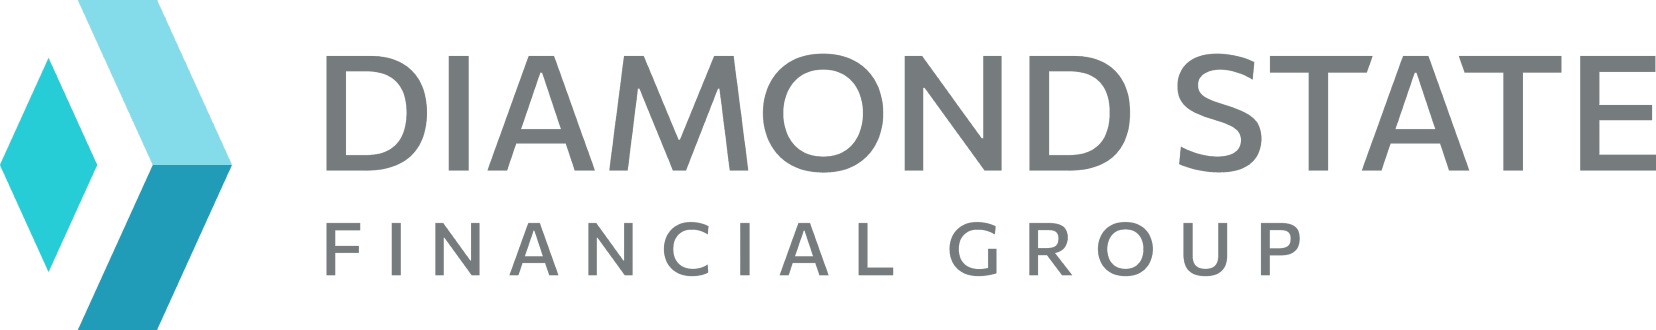 Diamond State Financial Group logo